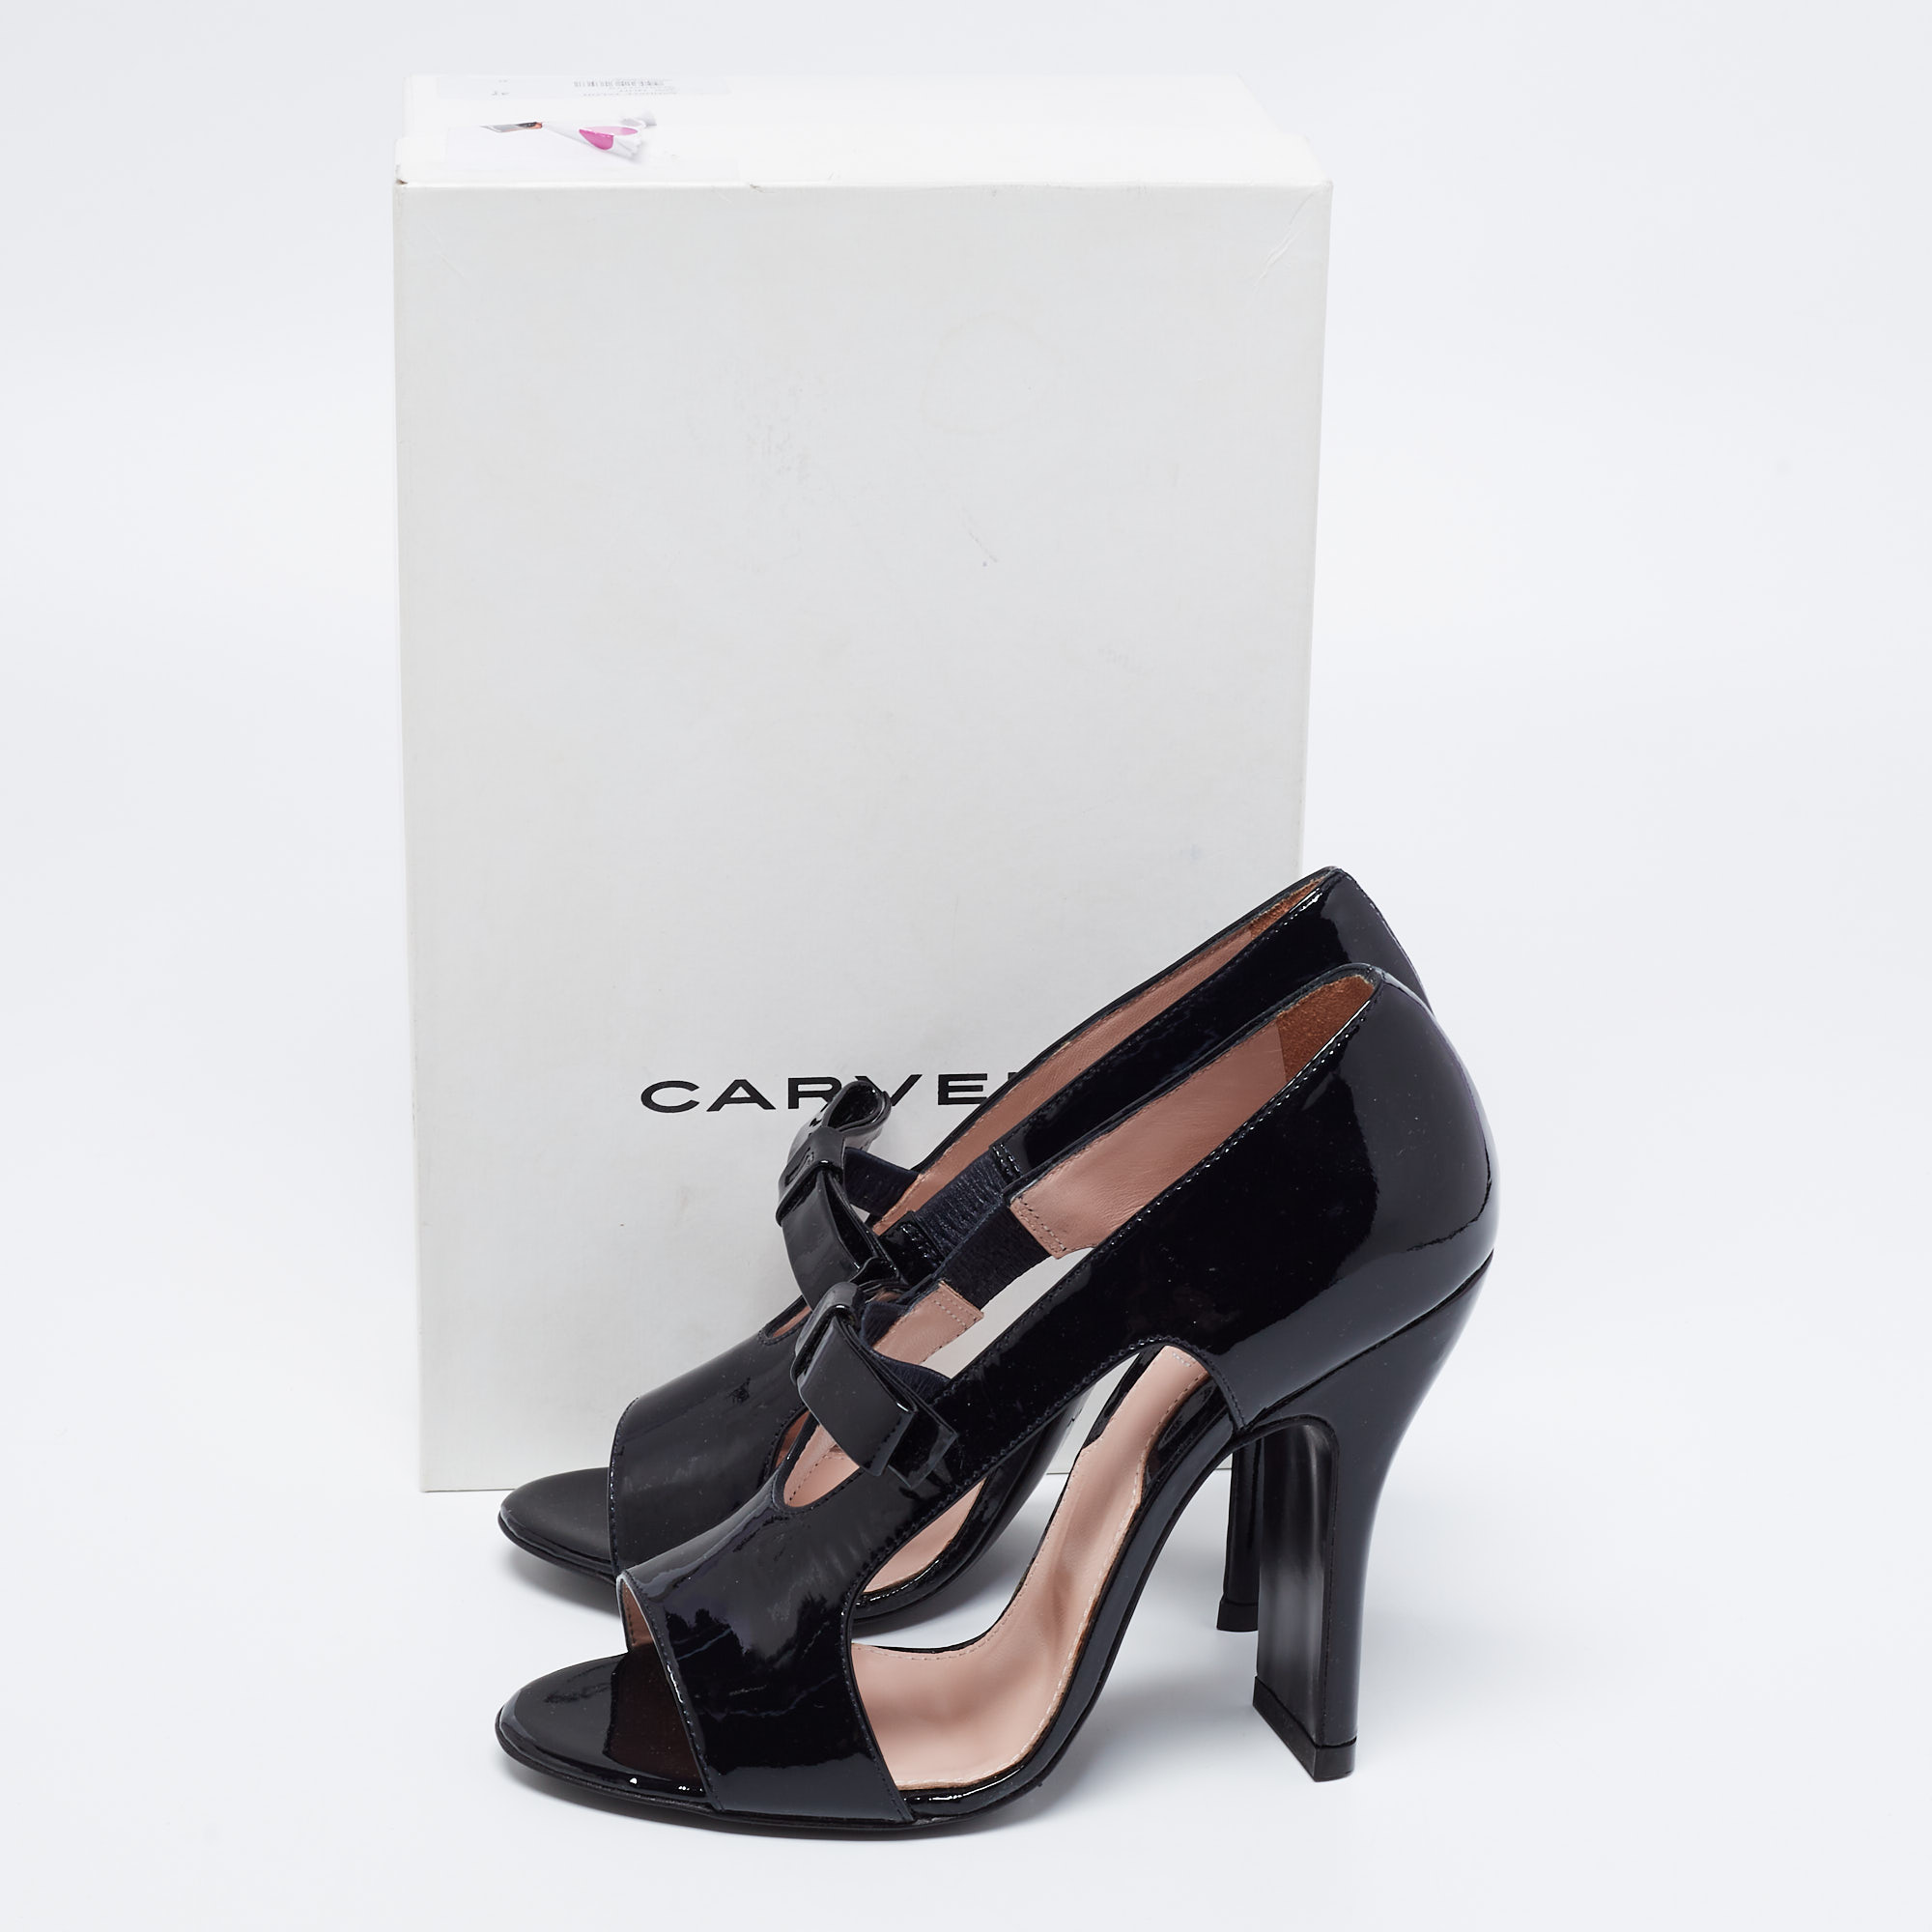 Carven Black Patent Leather Bow Cut-Out Sandals Size 37